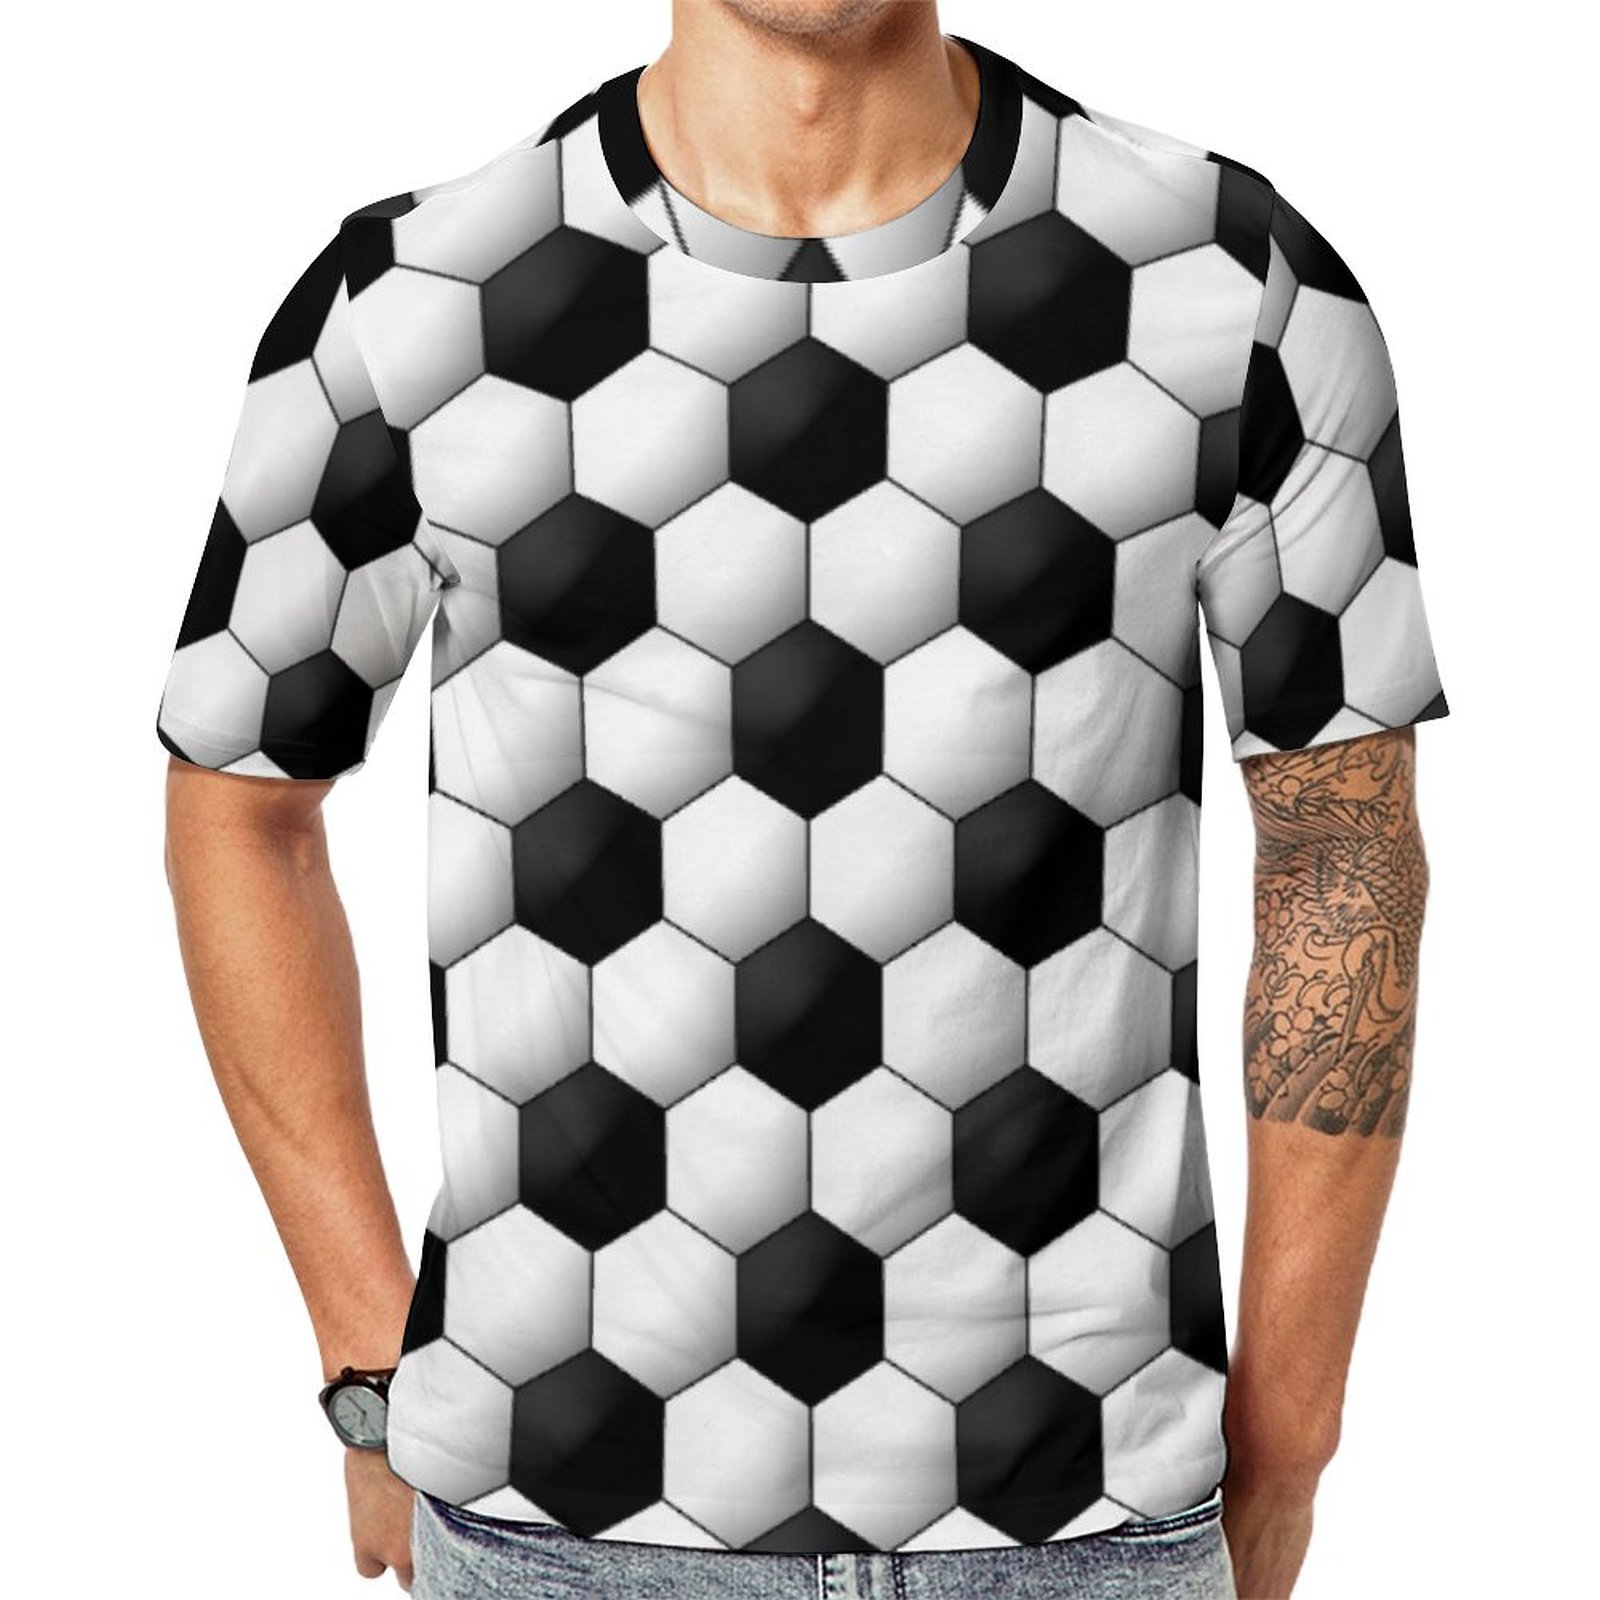 Football Fan Design Short Sleeve Print Unisex Tshirt Summer Casual Tees for Men and Women Coolcoshirts